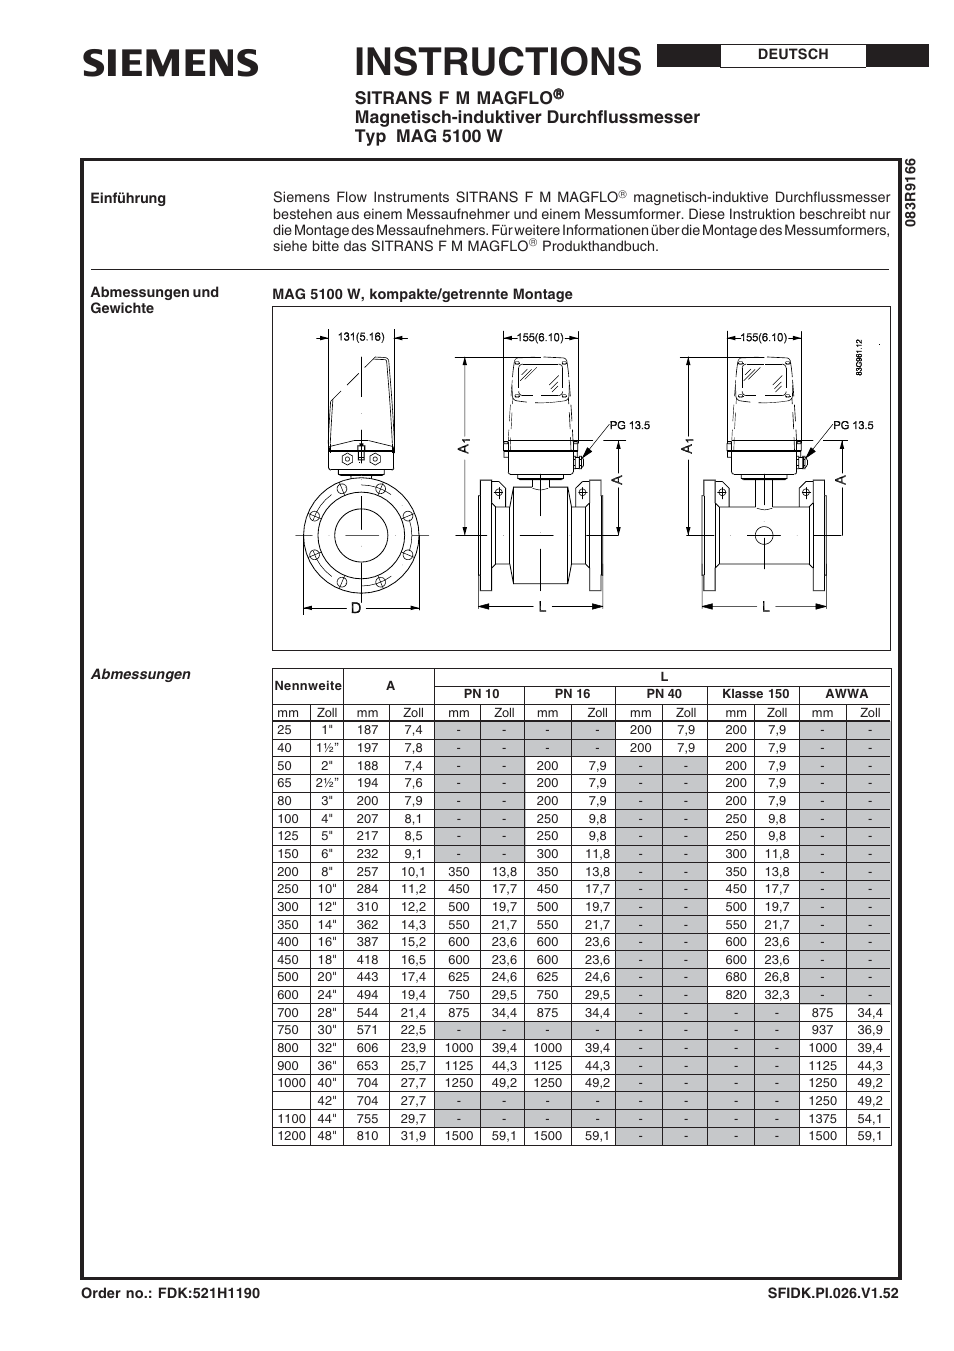 Deutsch, Instructions, Sitrans f m magflo | Siemens SITRANS F M MAGFLO MAG  5100 W User Manual | Page 9 / 32 | Original mode